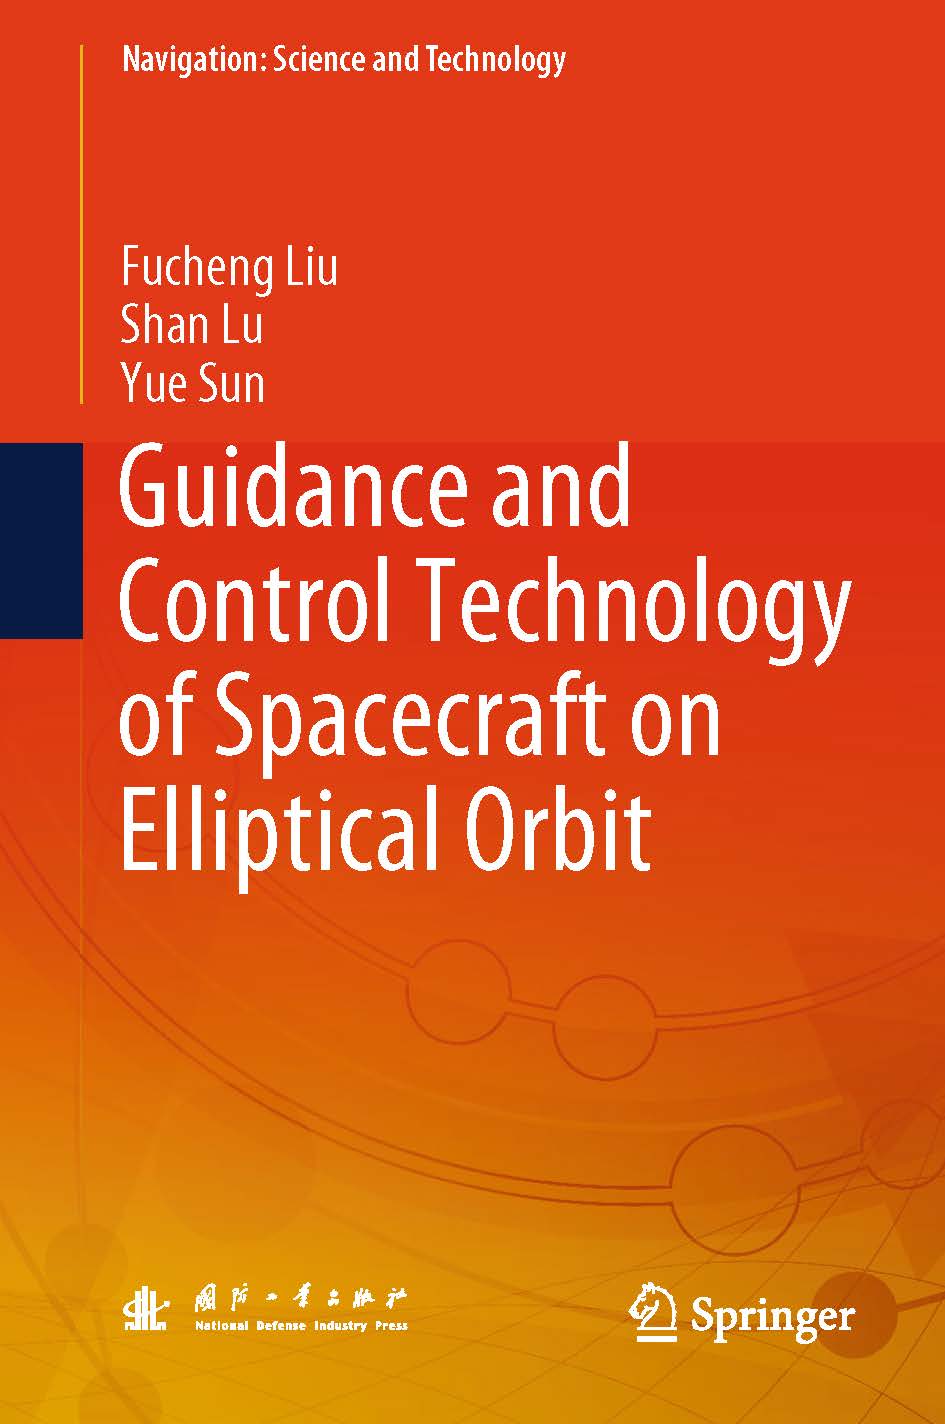 页面提取自－2019_Book_Guidance and Control Technology of Spacecraft on Elliptical Orbit.jpg